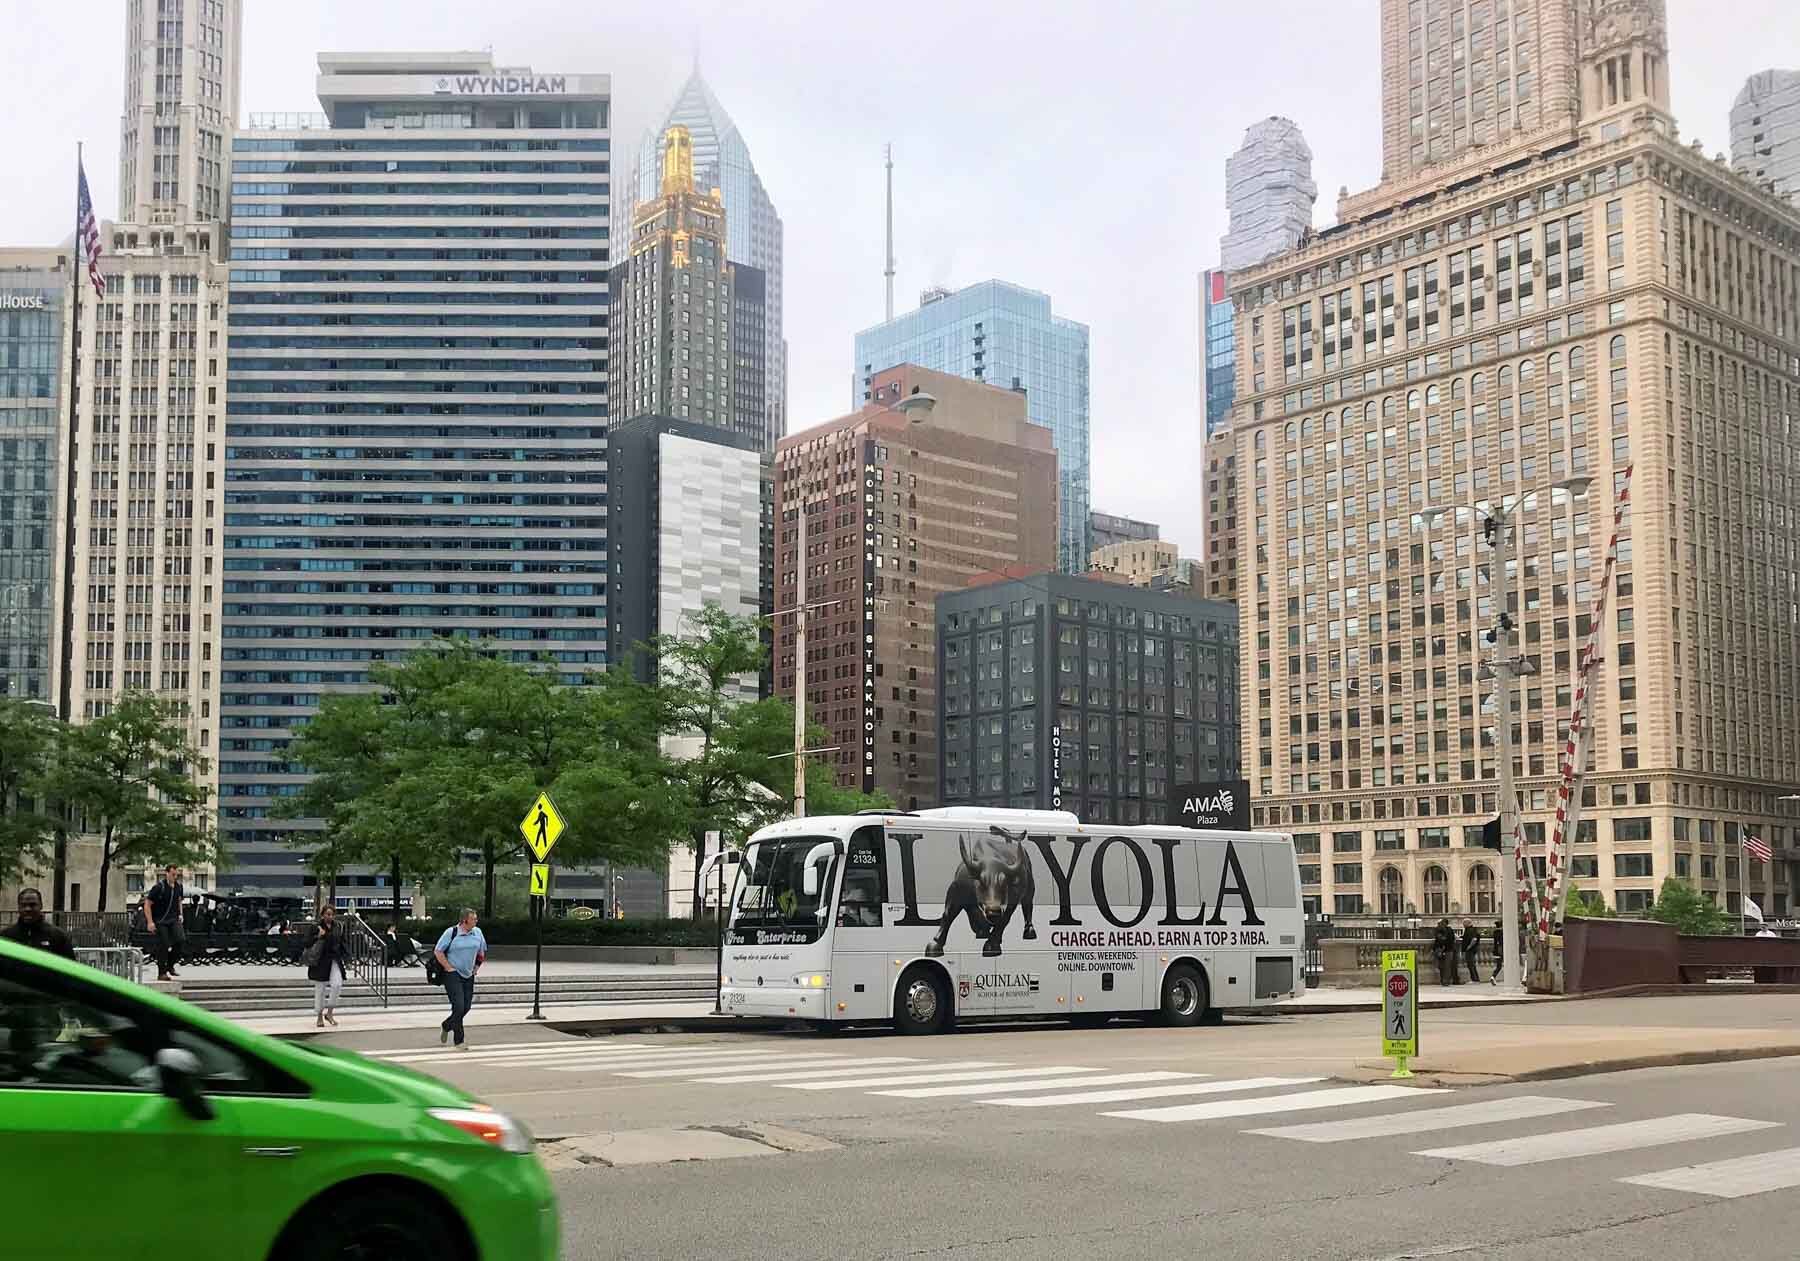 Loyola+bus+June+2018+(3).jpg